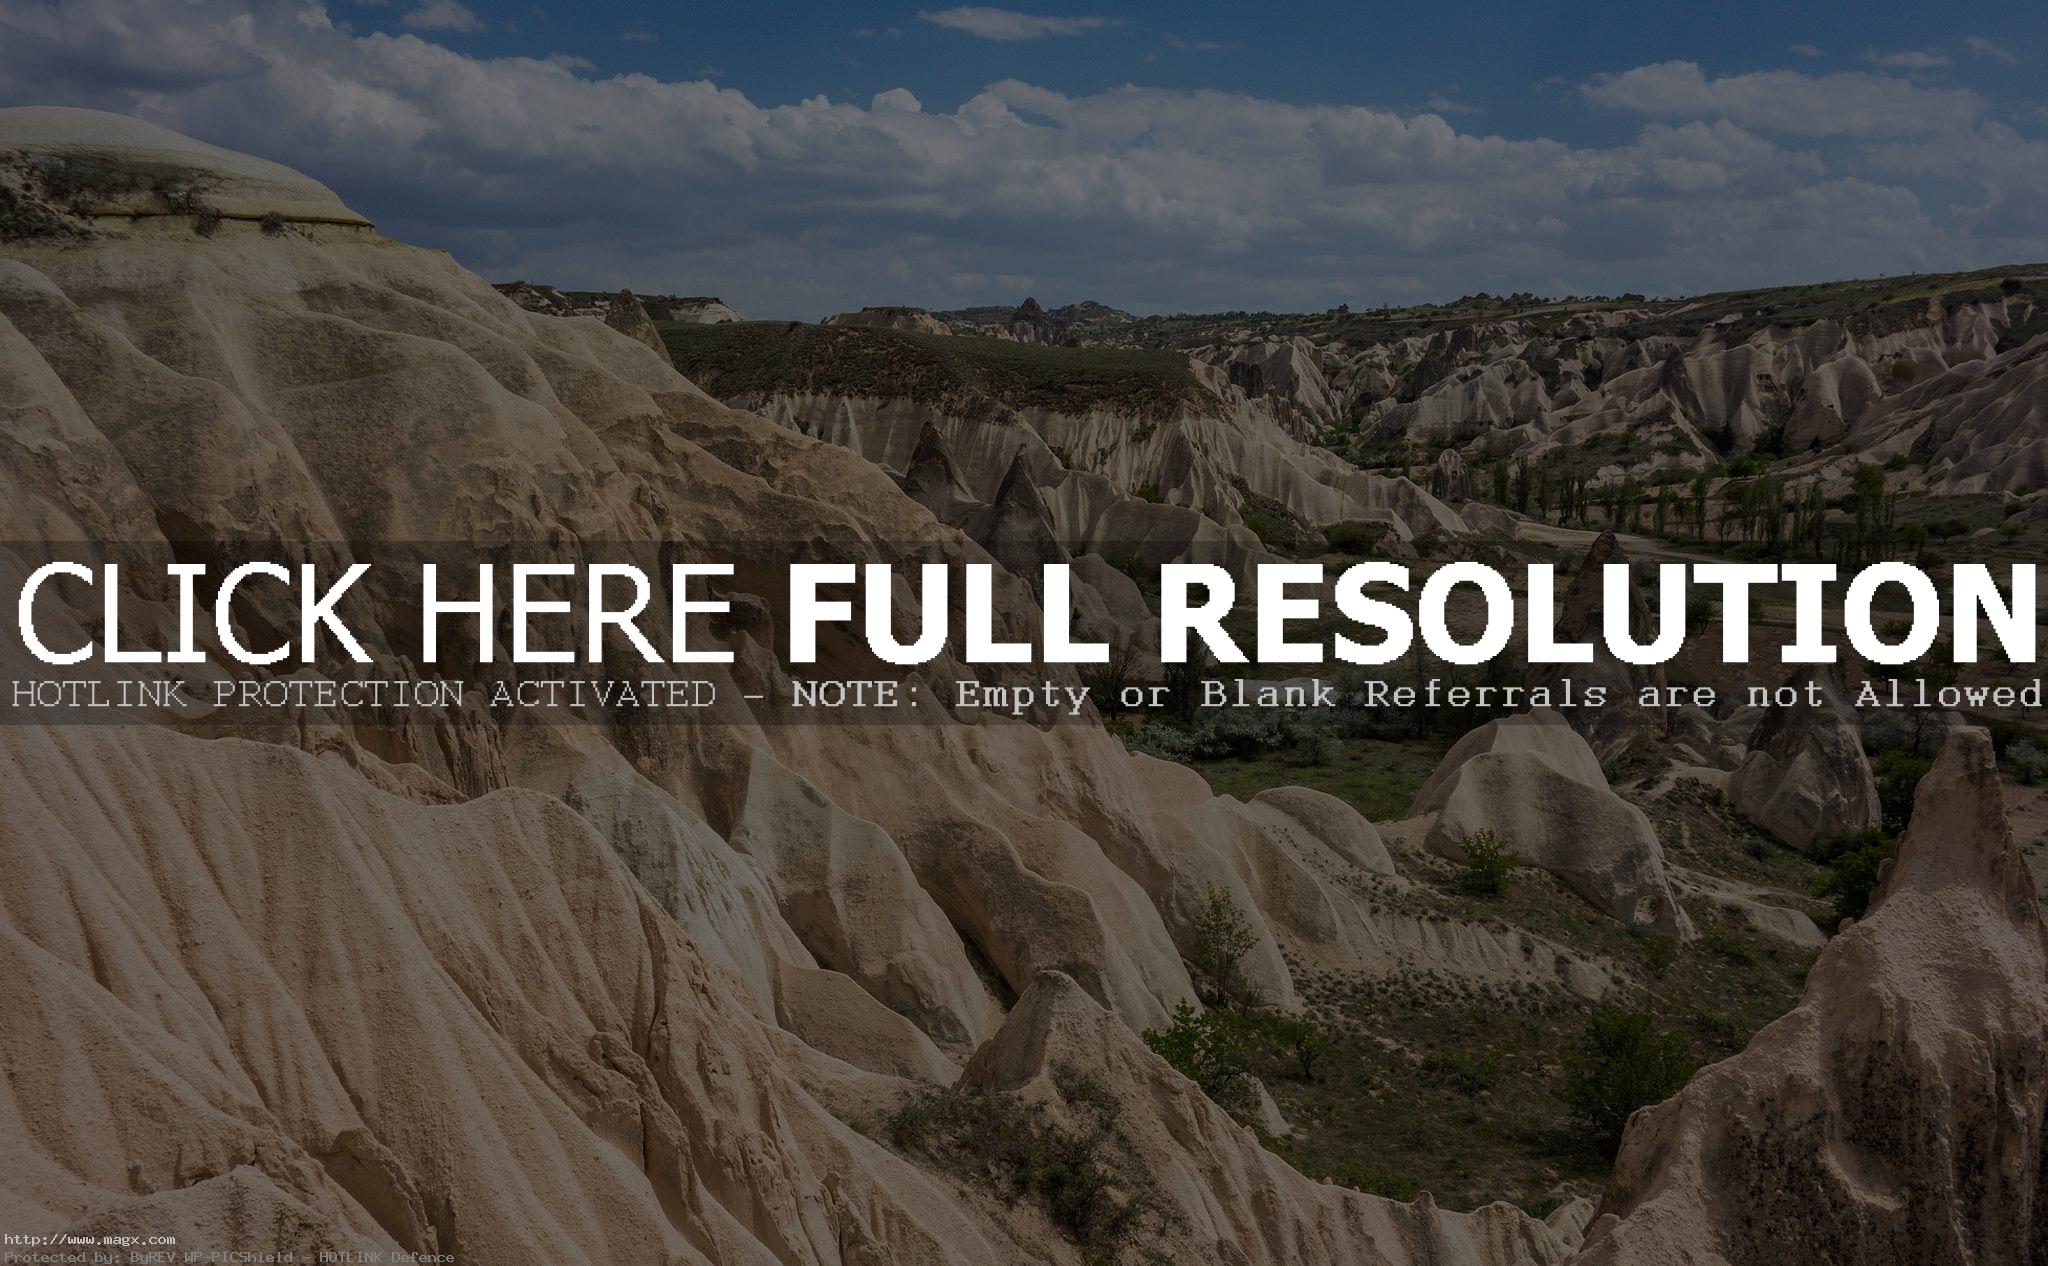 cappadocia8 Rock Sites of Cappadocia and Goreme National Park in Turkey